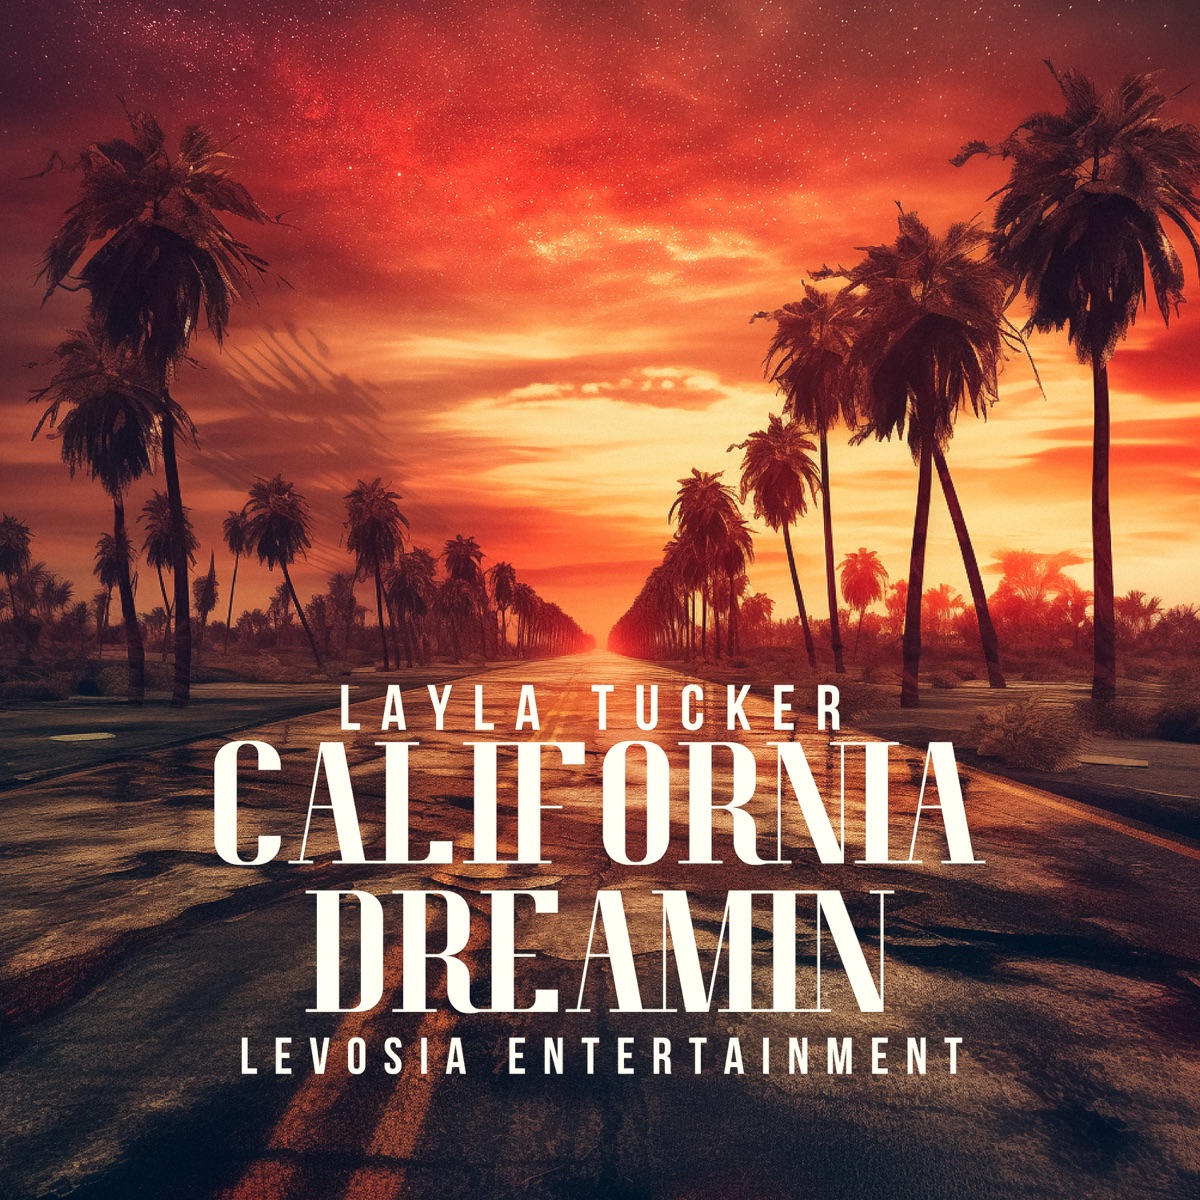 California Dreamin' - Single - Album by ASPARAGUSproject - Apple Music